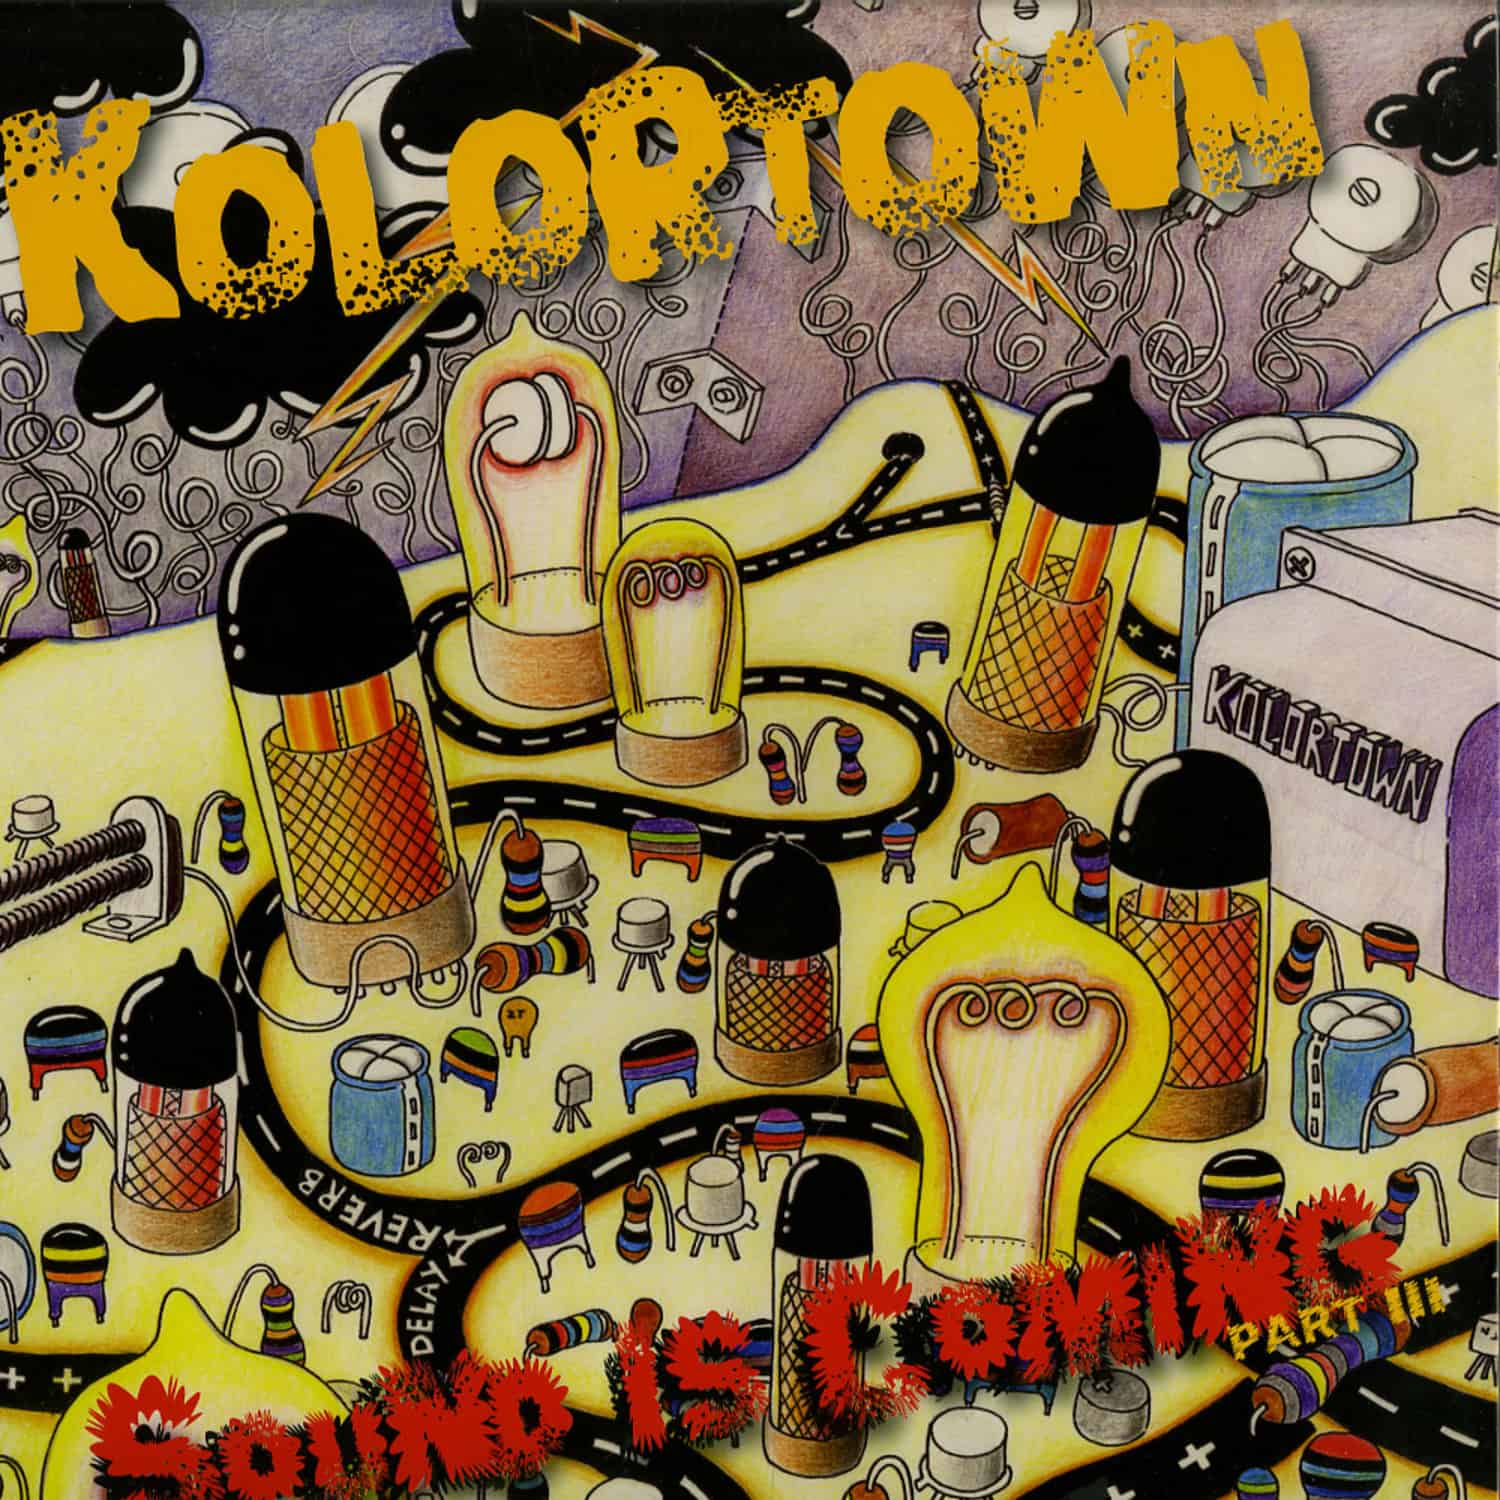 Kolortown - SOUND IS COMING PART 3